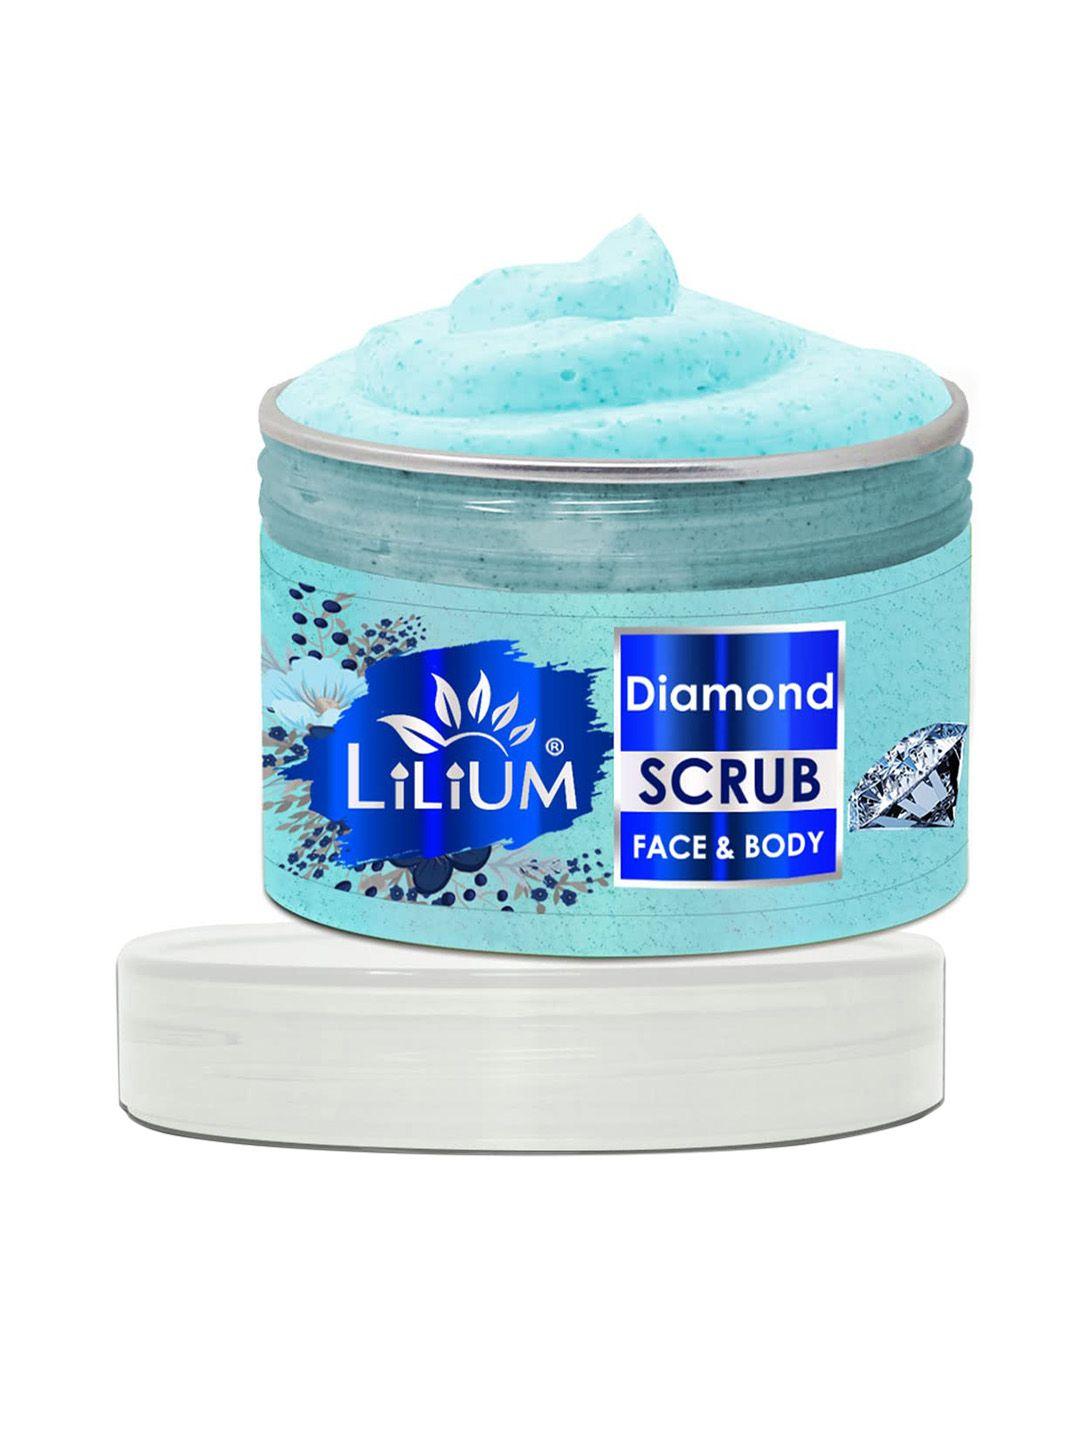 lilium diamond face & body scrub with carbomer & aloevera - 250 g